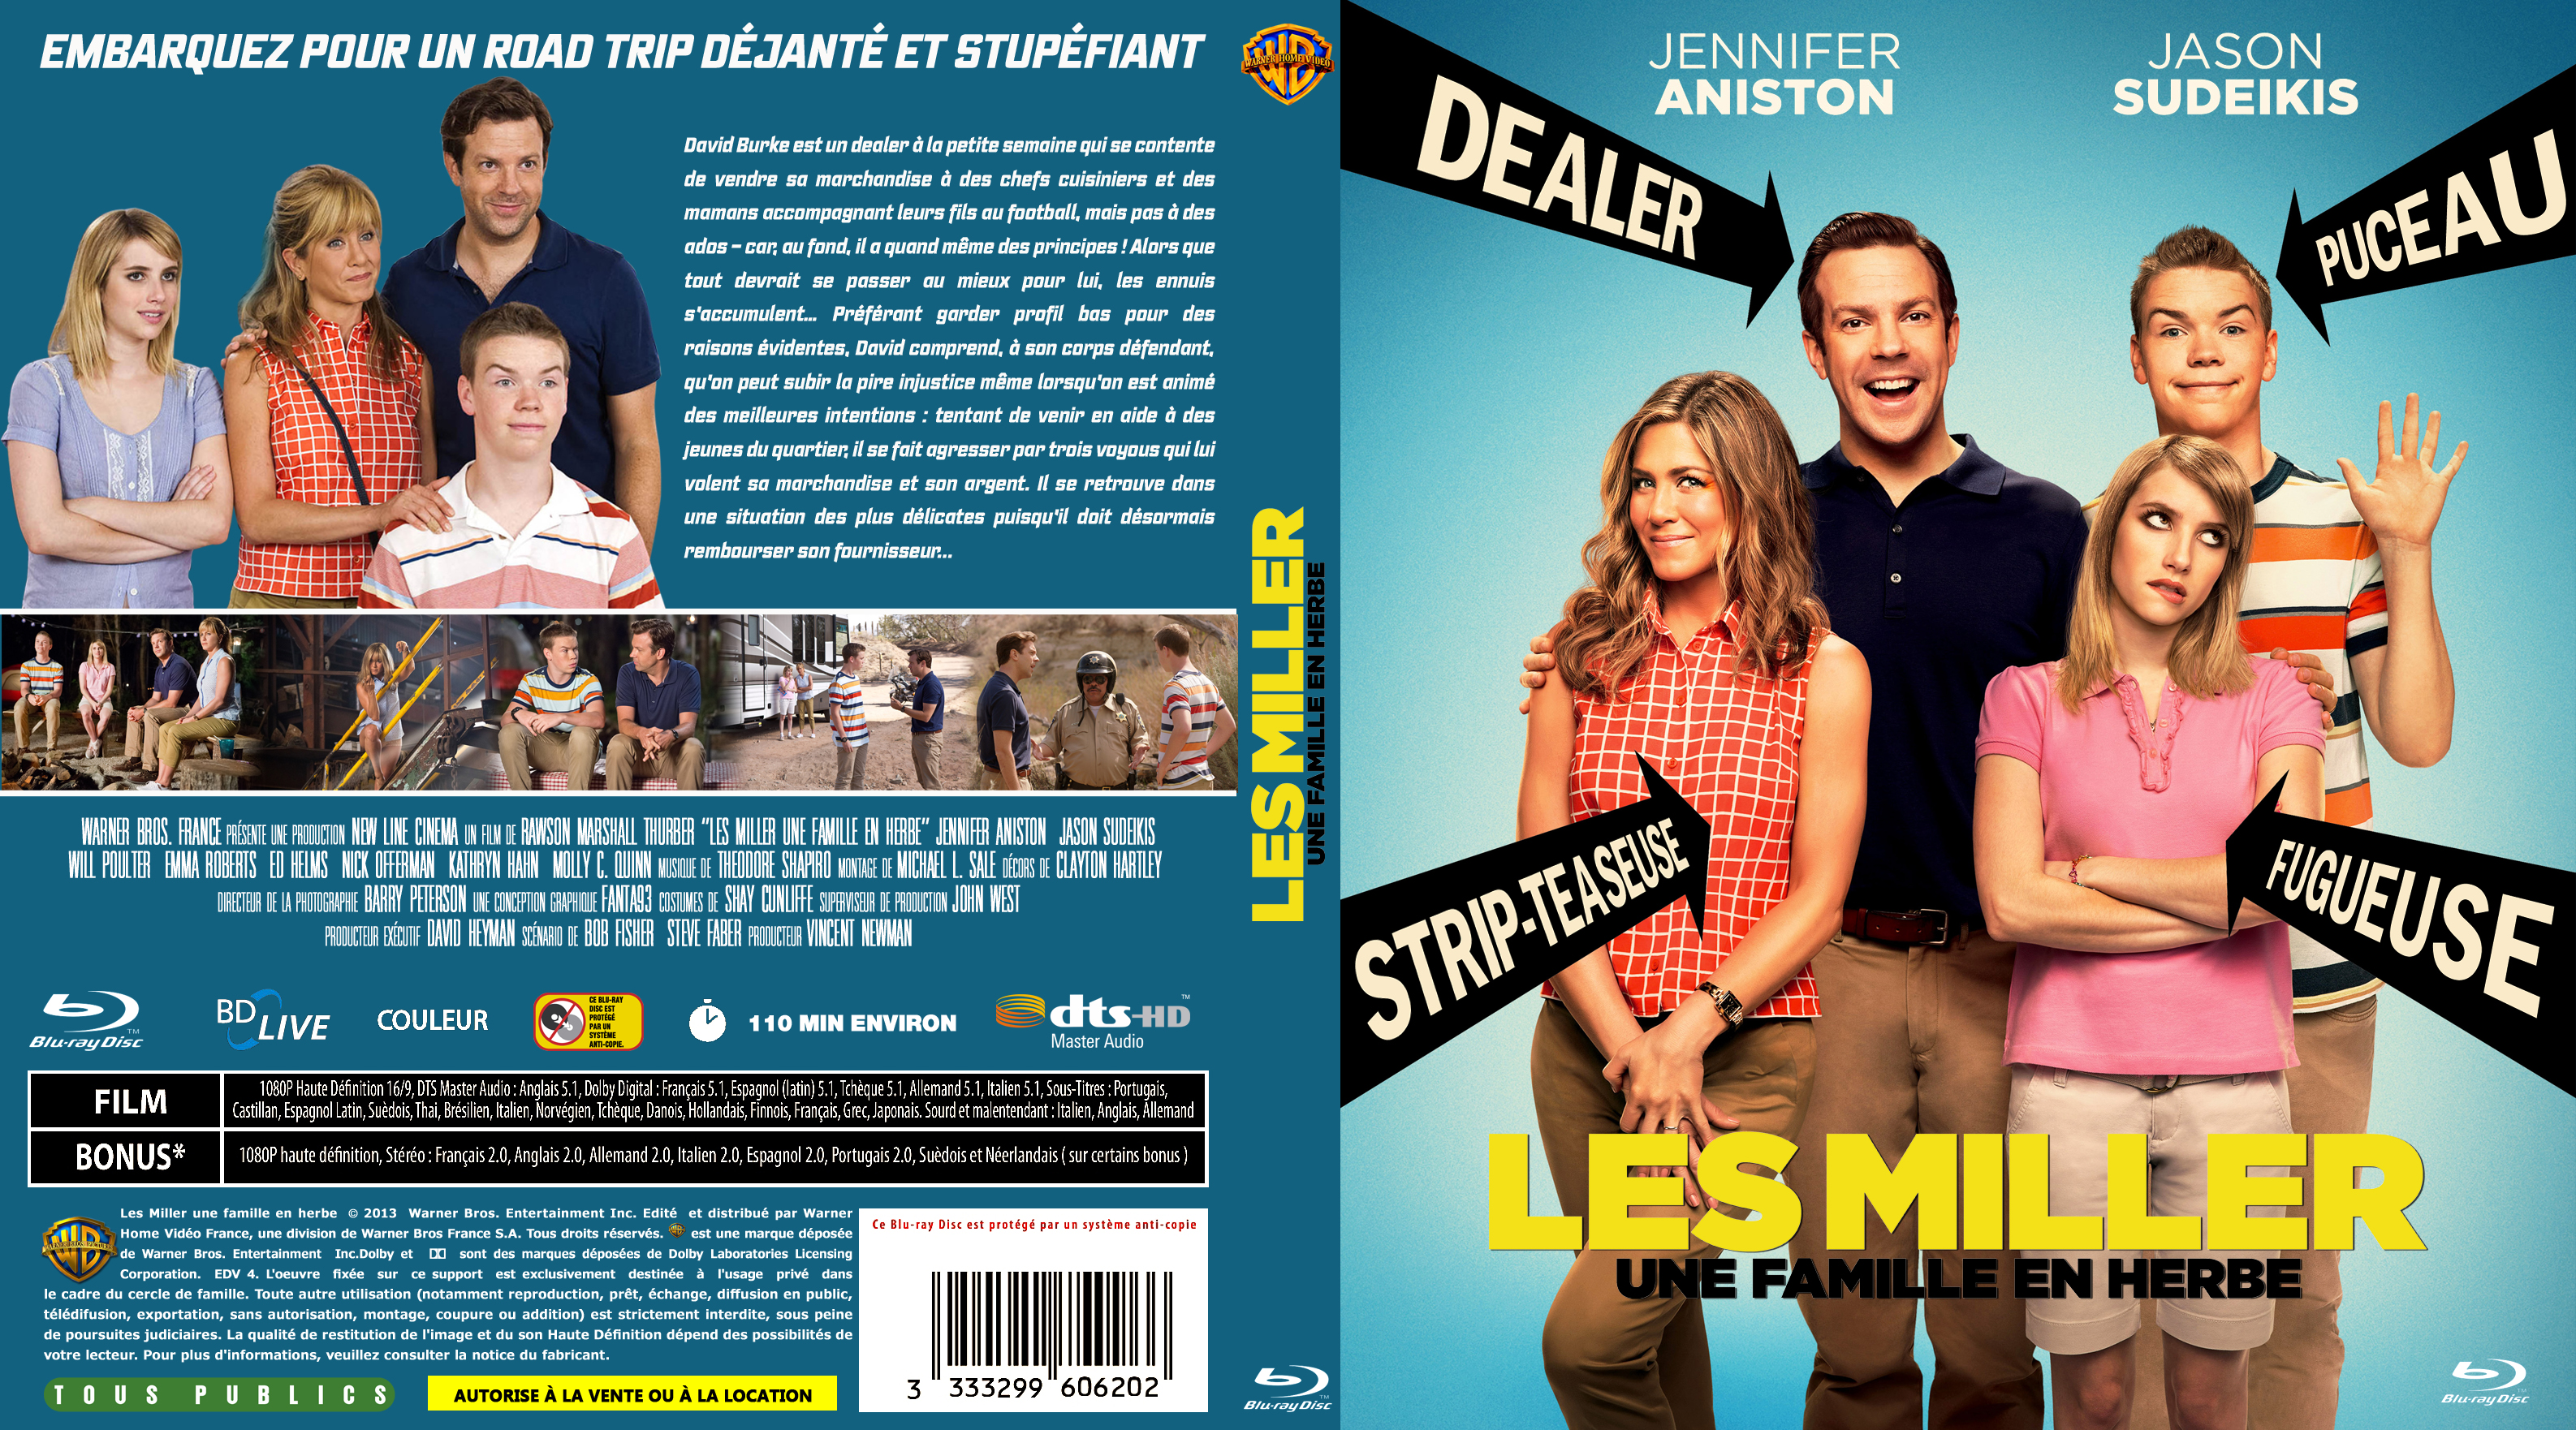 Jaquette DVD Les Miller, une famille en herbe custom (BLU-RAY)